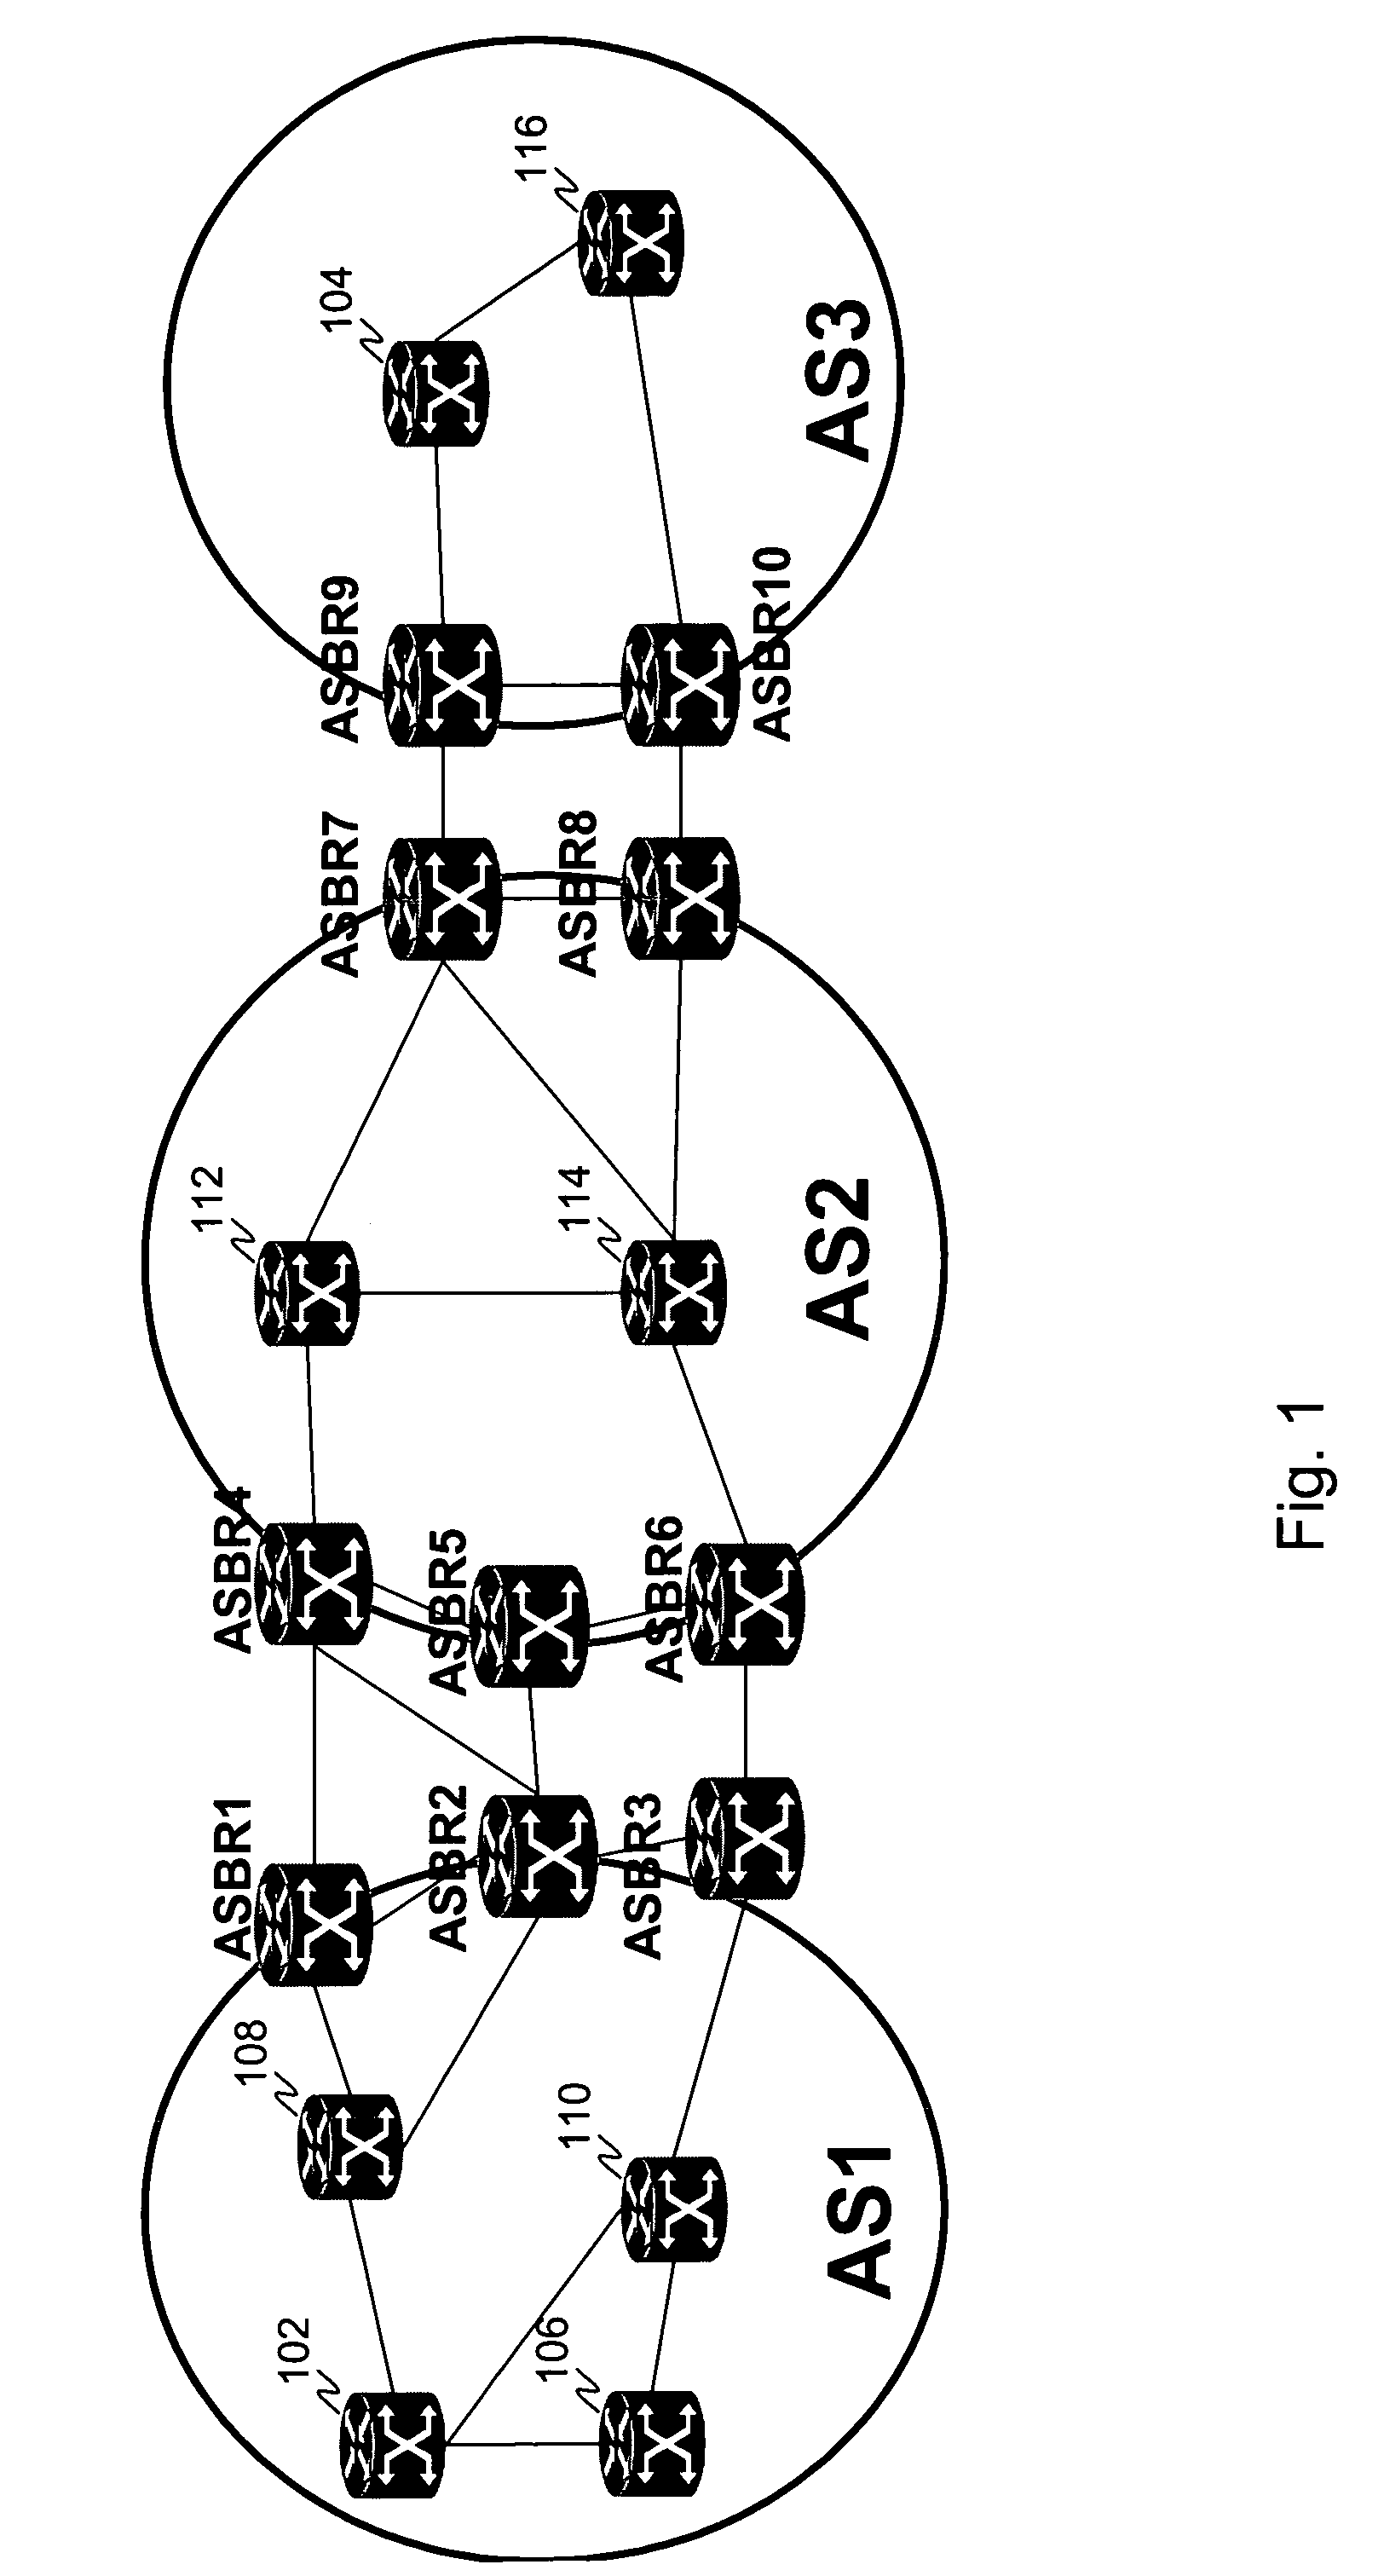 Concurrent path computation using virtual shortest path tree